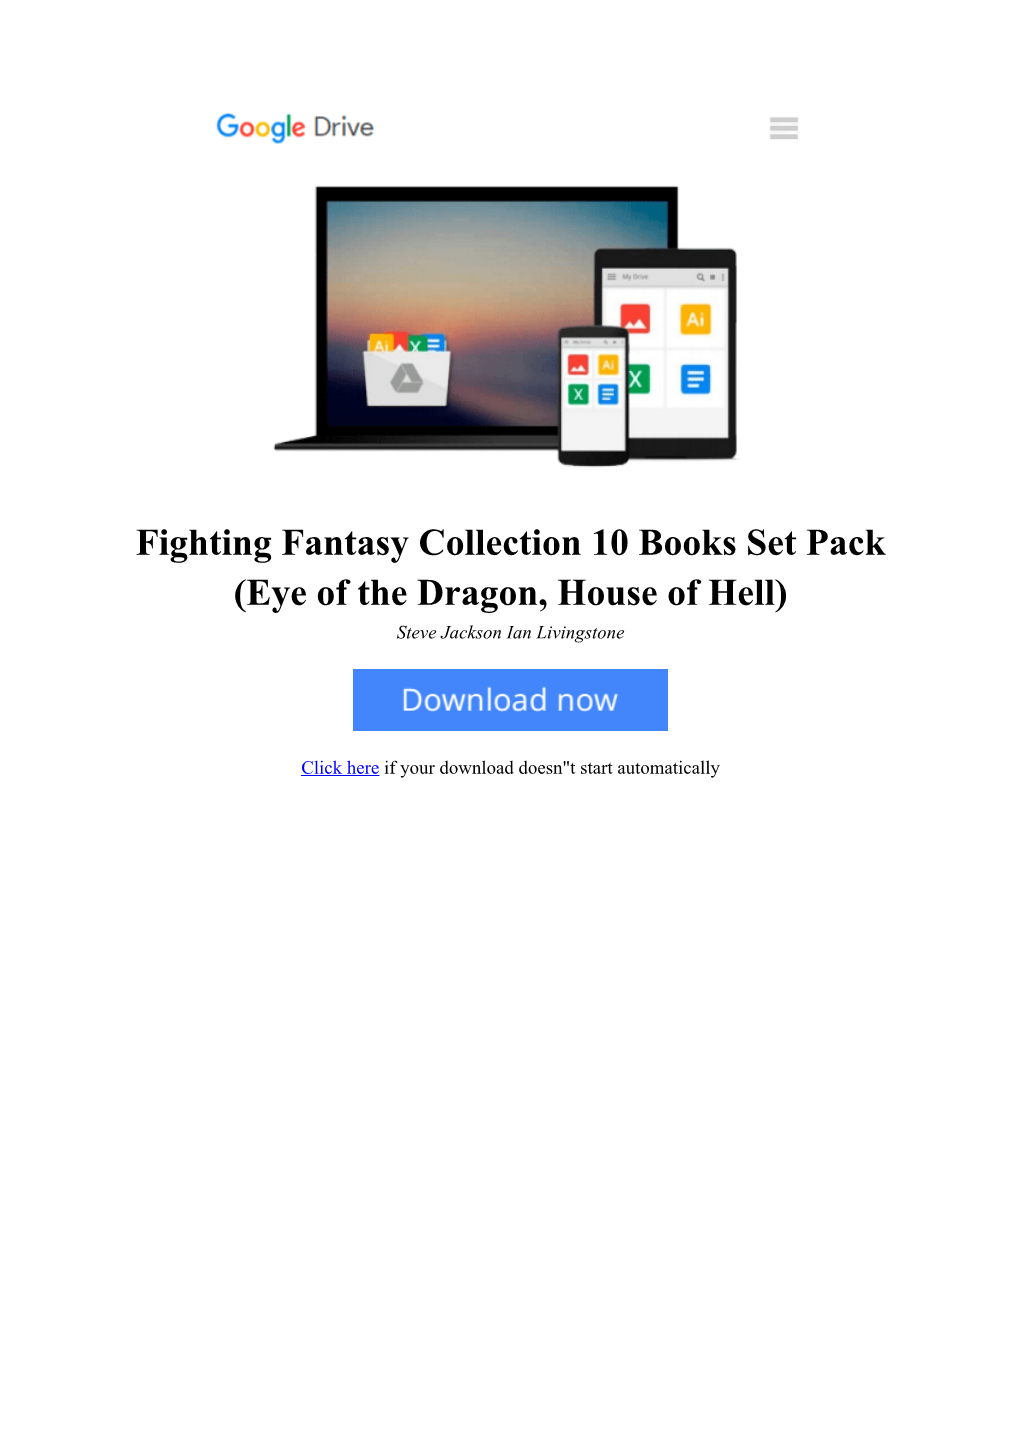 Fighting Fantasy Collection 10 Books Set Pack (Eye of the Dragon, House of Hell) Steve Jackson Ian Livingstone